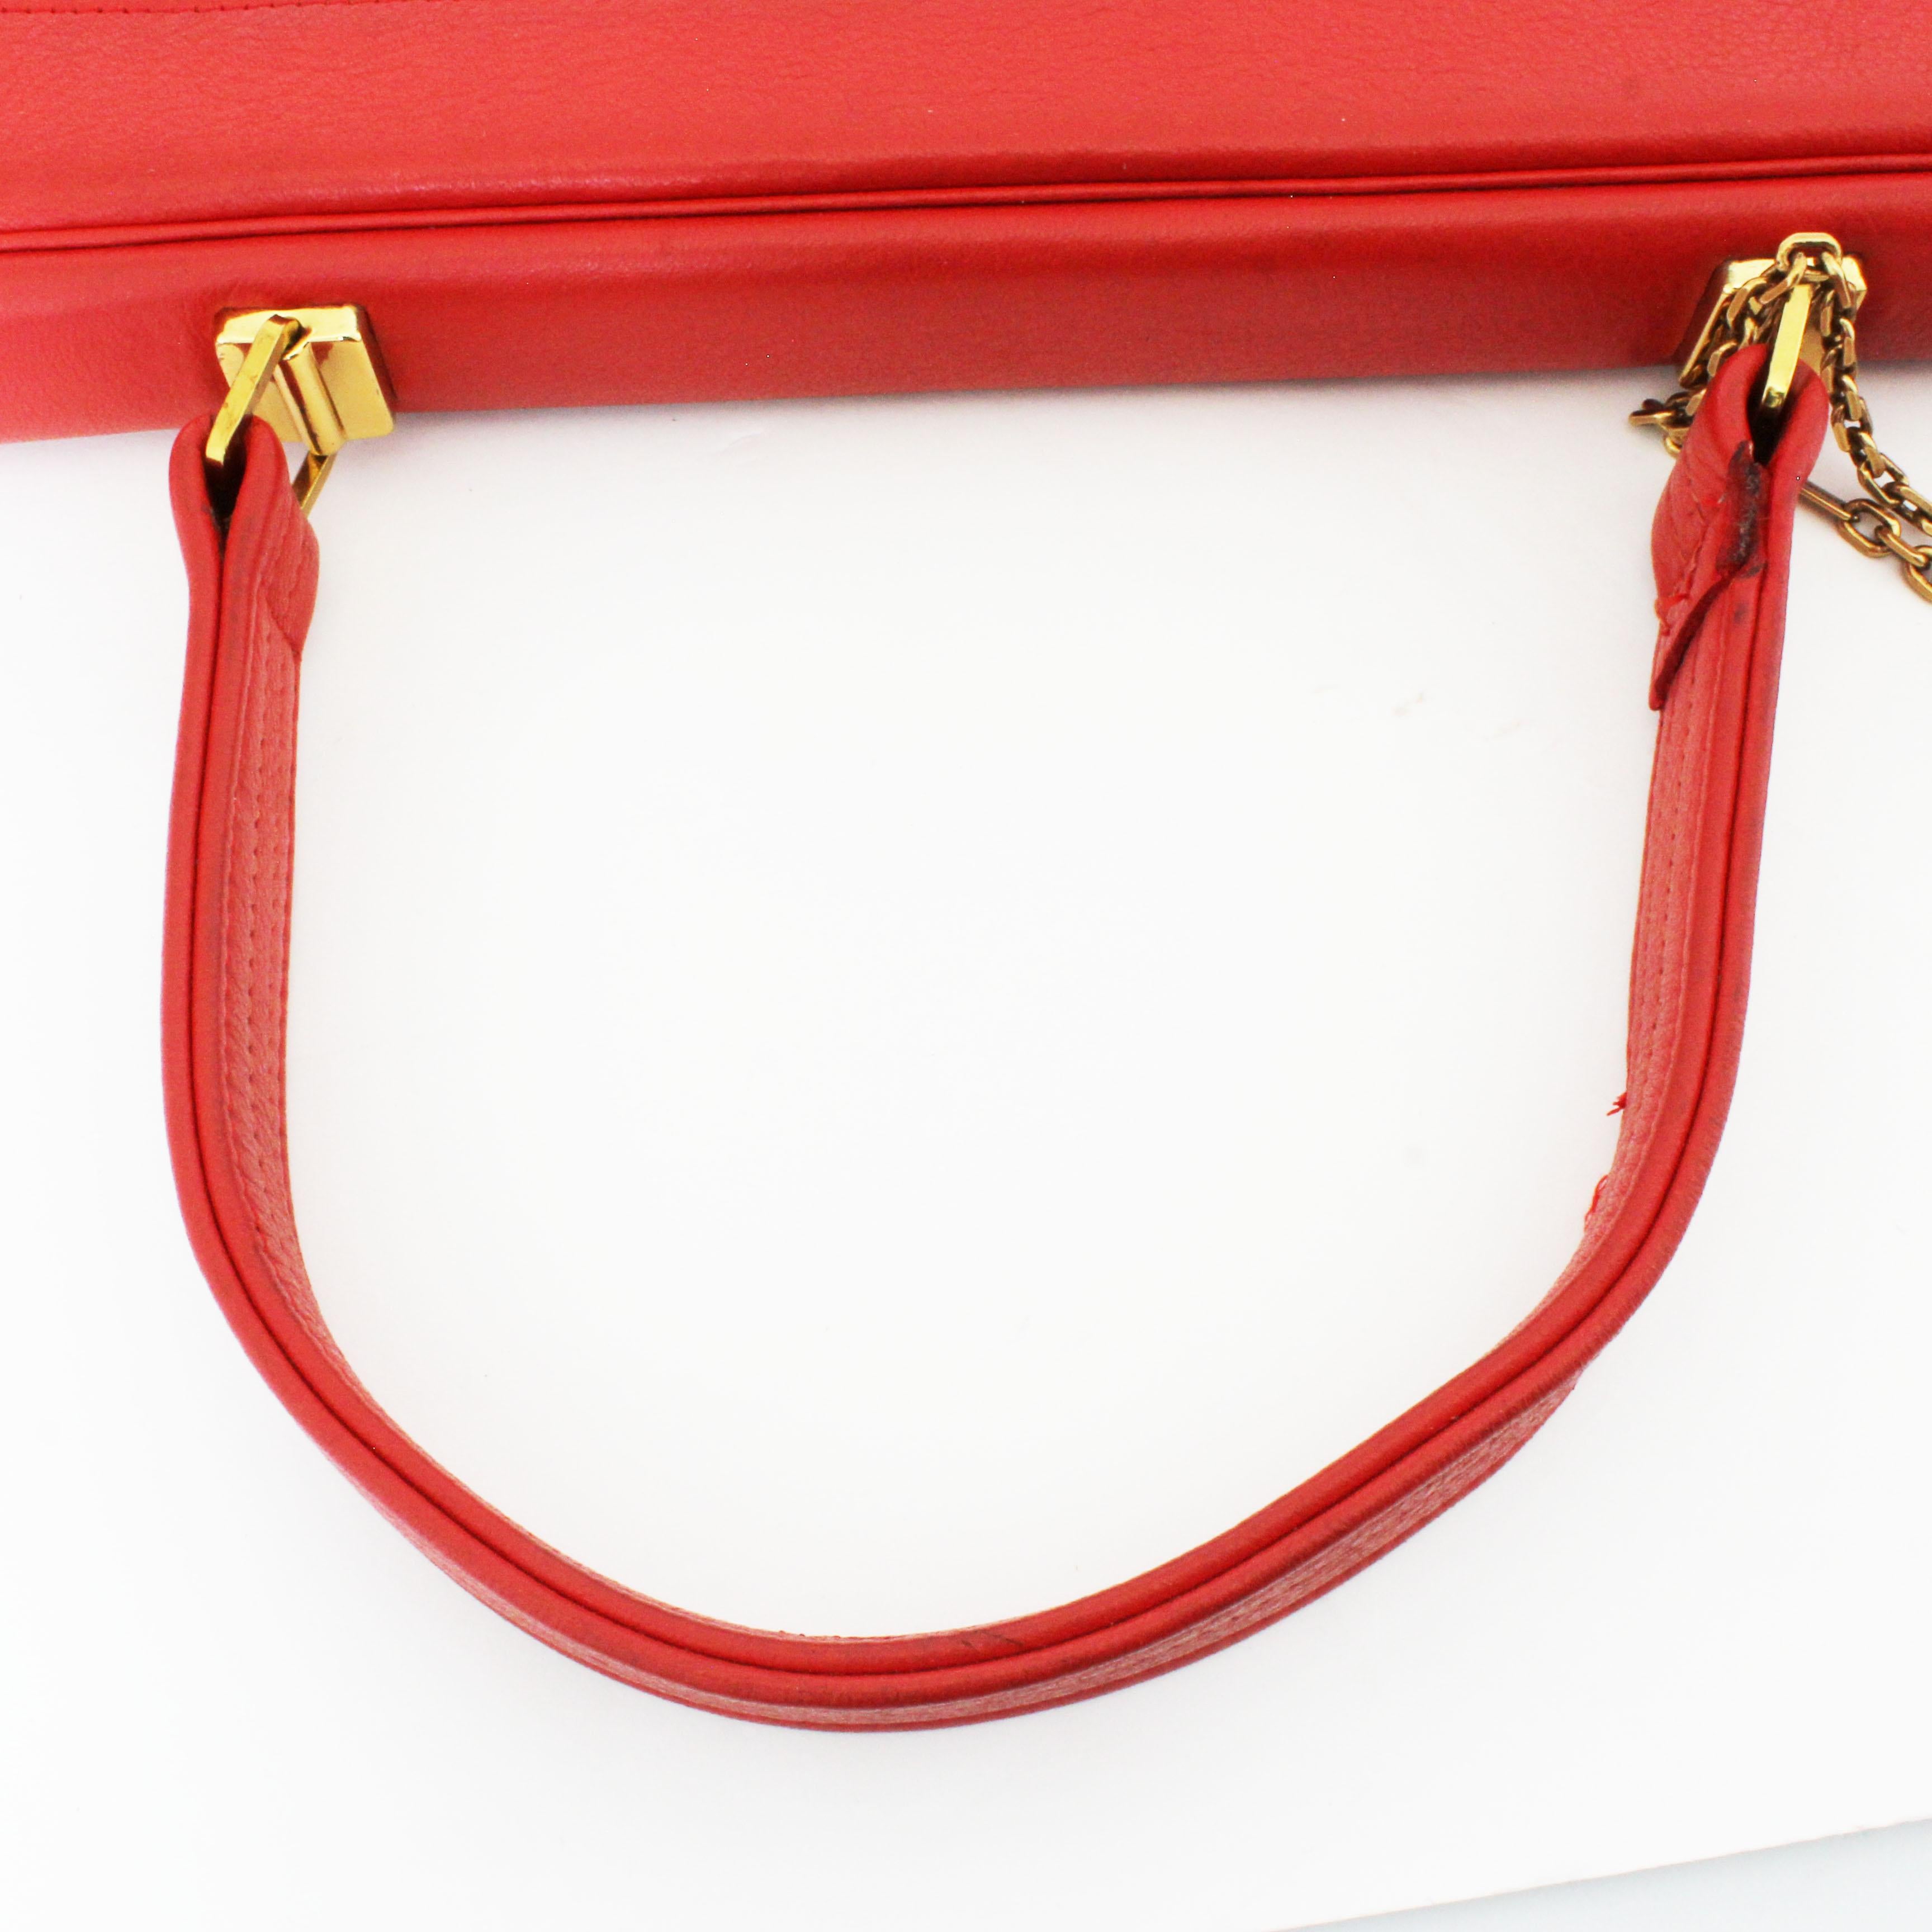 Bonnie Cashin for Coach Attache Bag Red Leather Briefcase Cashin Carry 60s  5